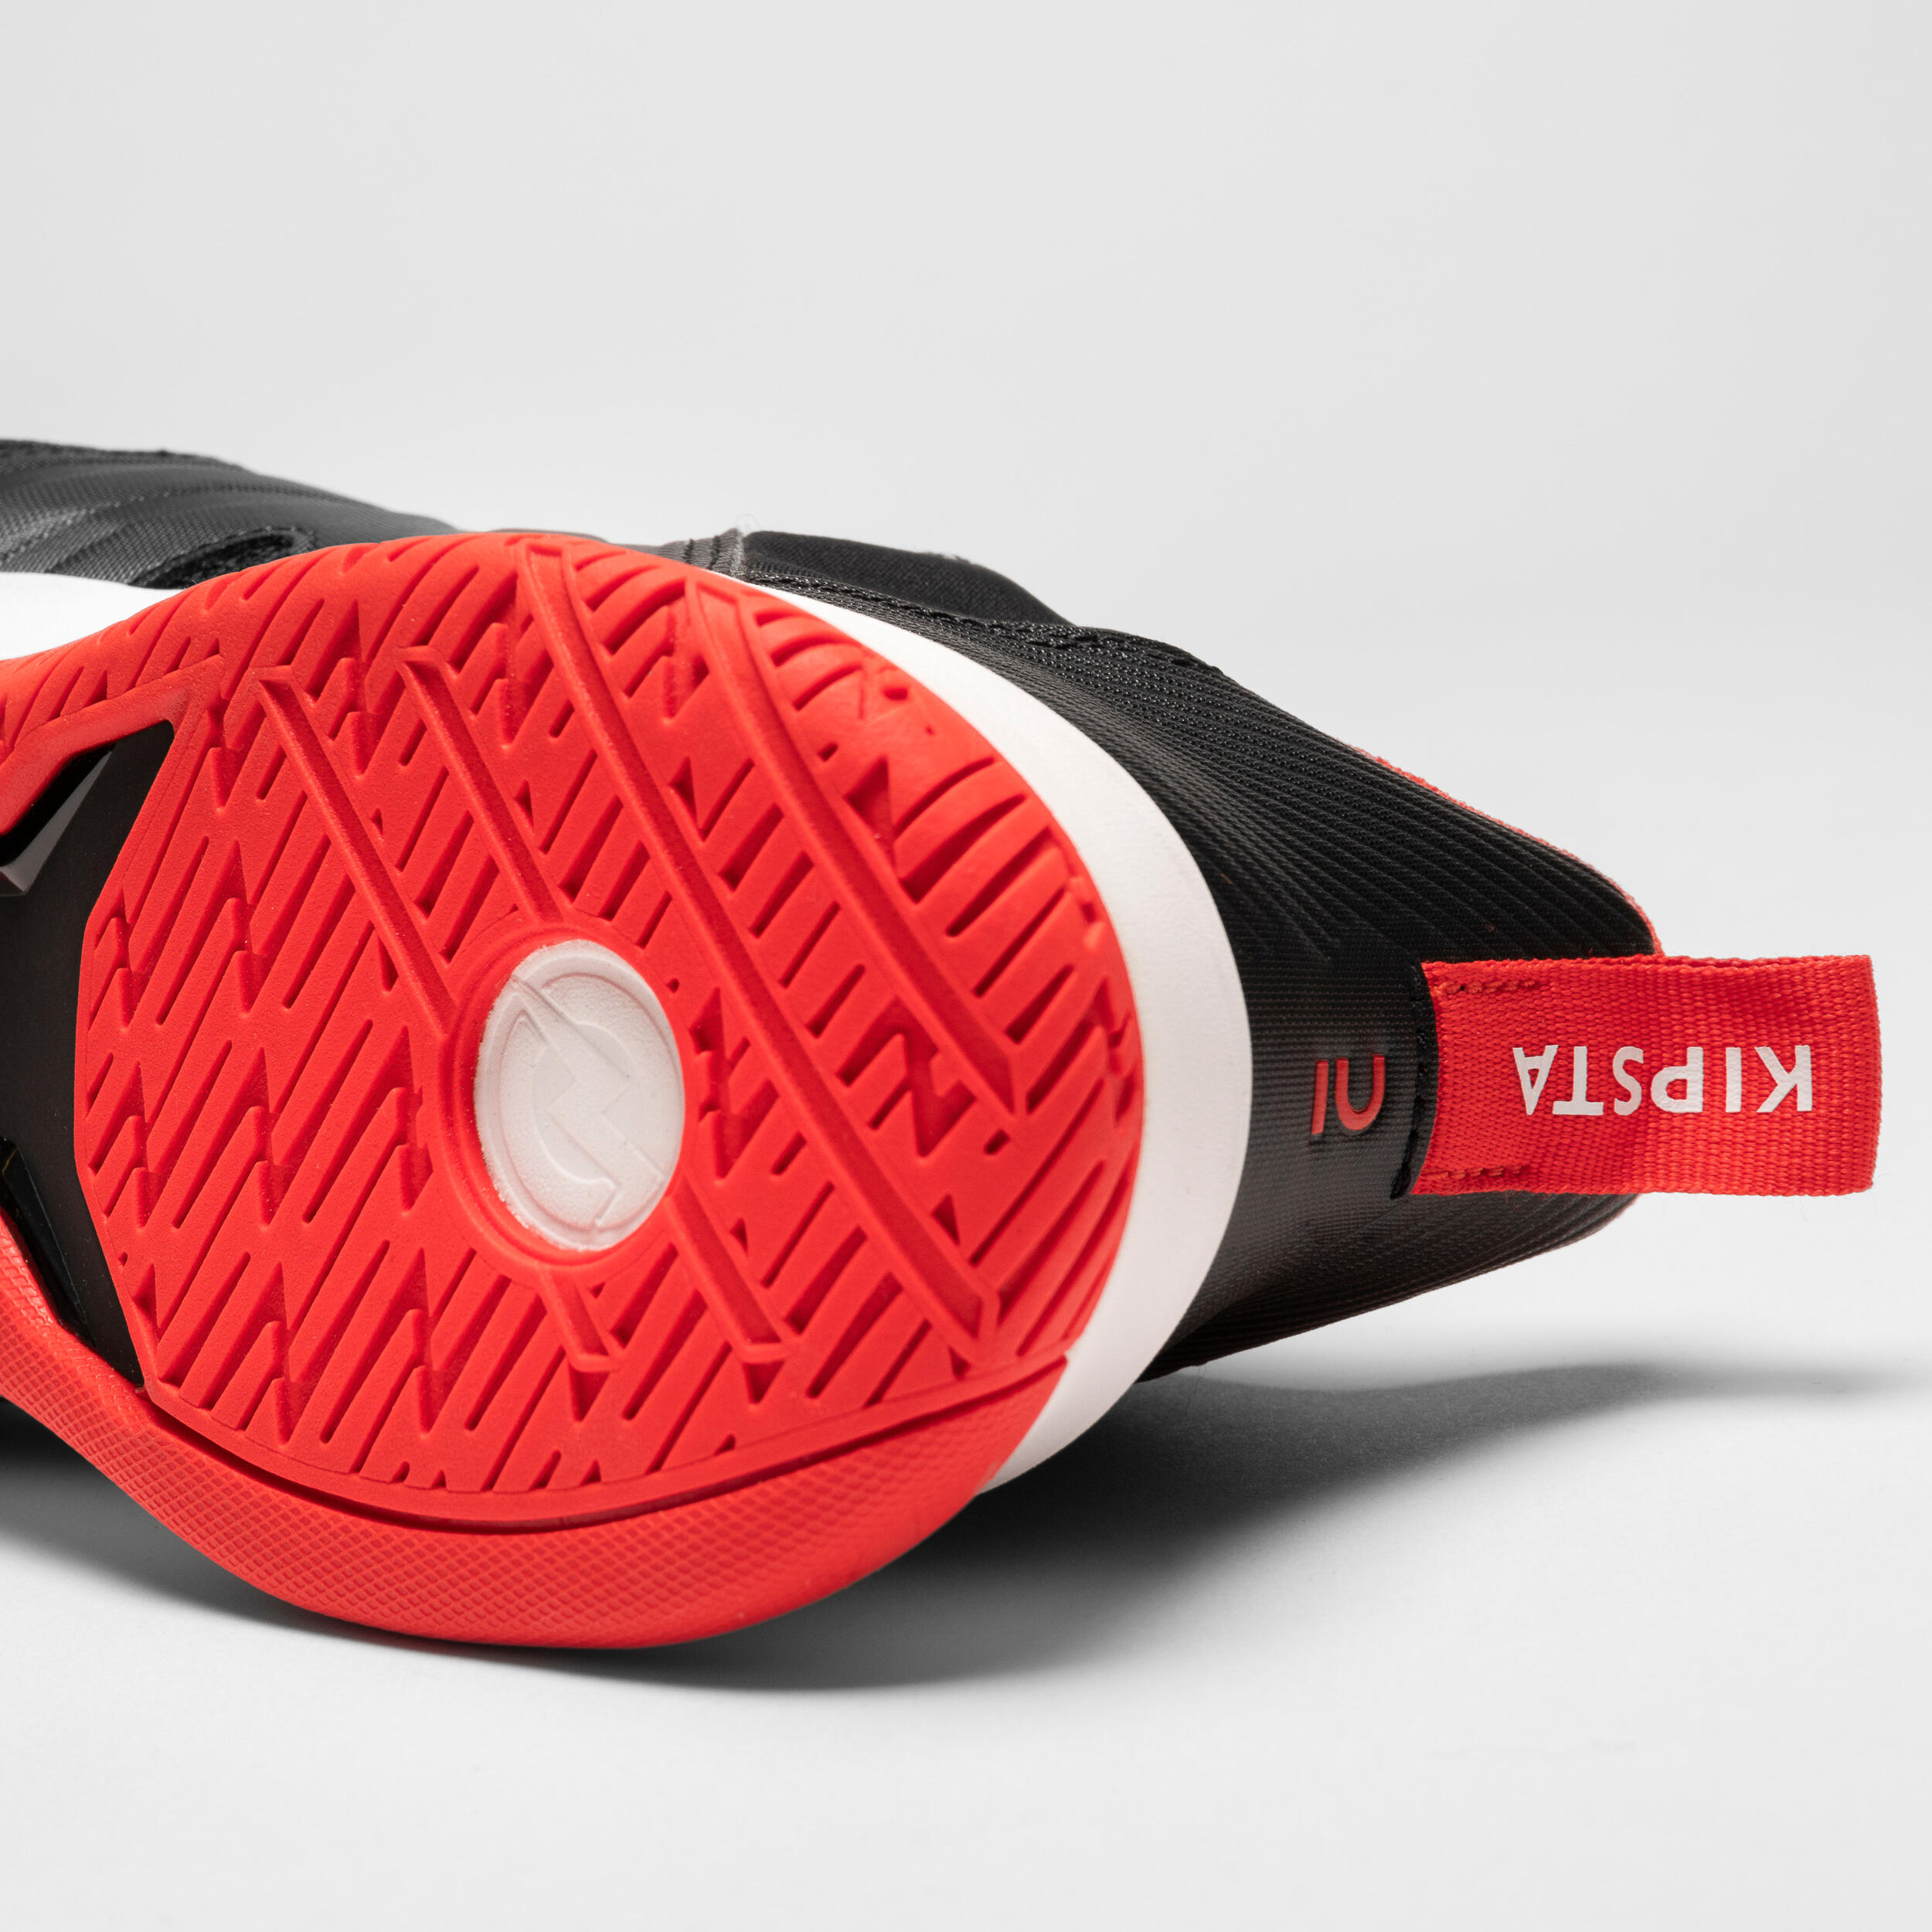 Handball Shoes H500 Faster - Black/Red 5/6